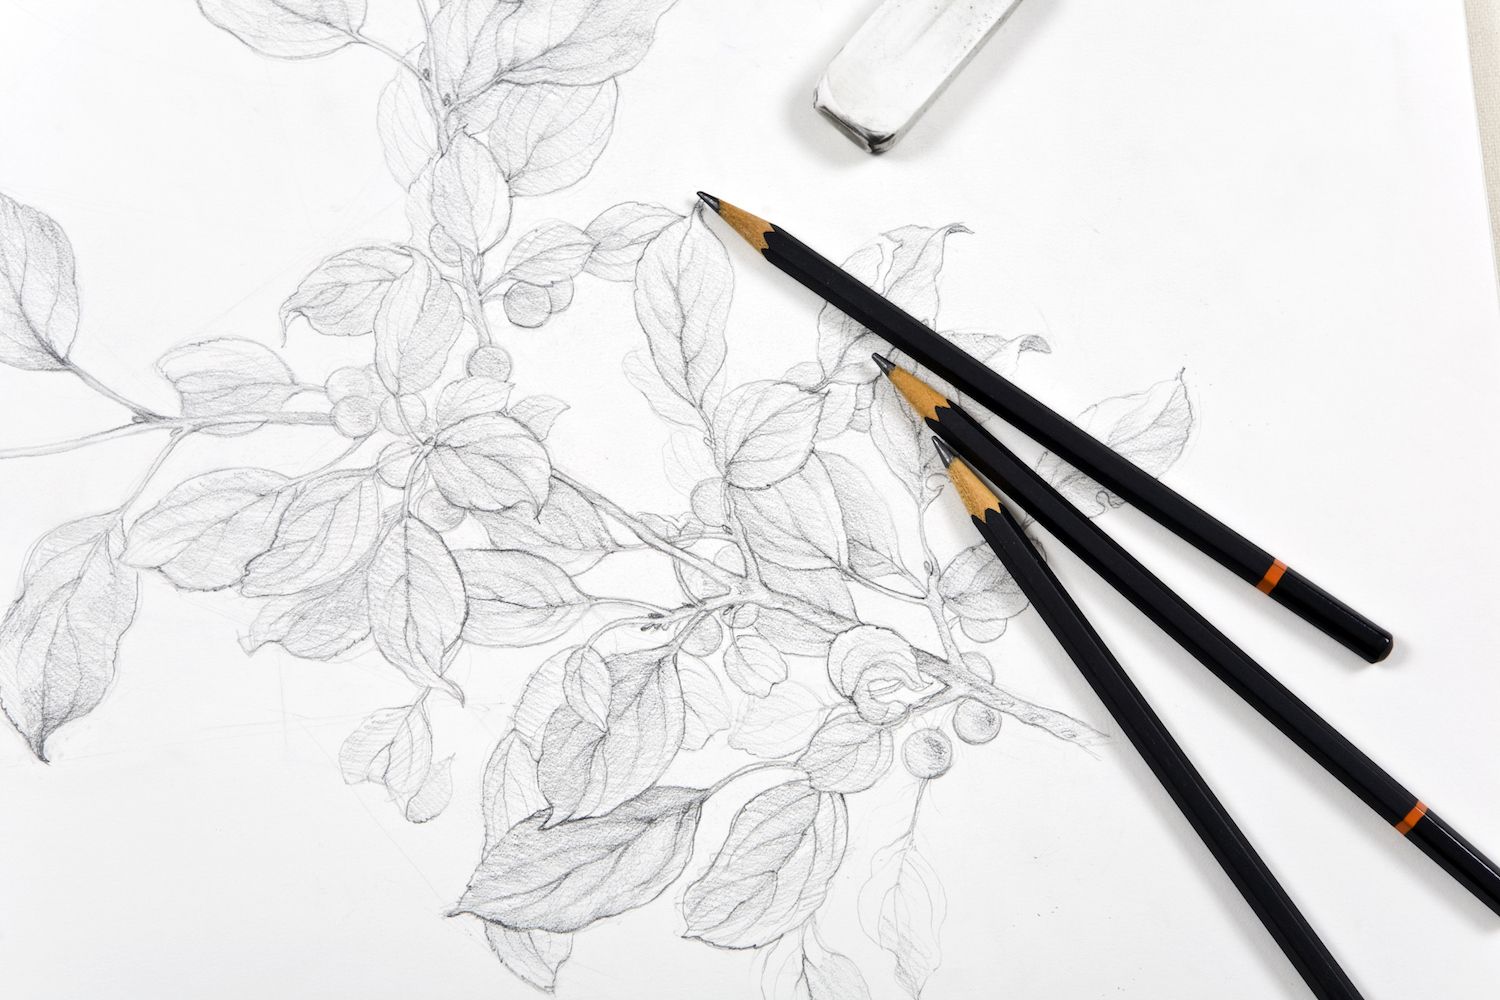 XtraClass - Good News! Xtraclass arrange a Pencil Drawing... | Facebook